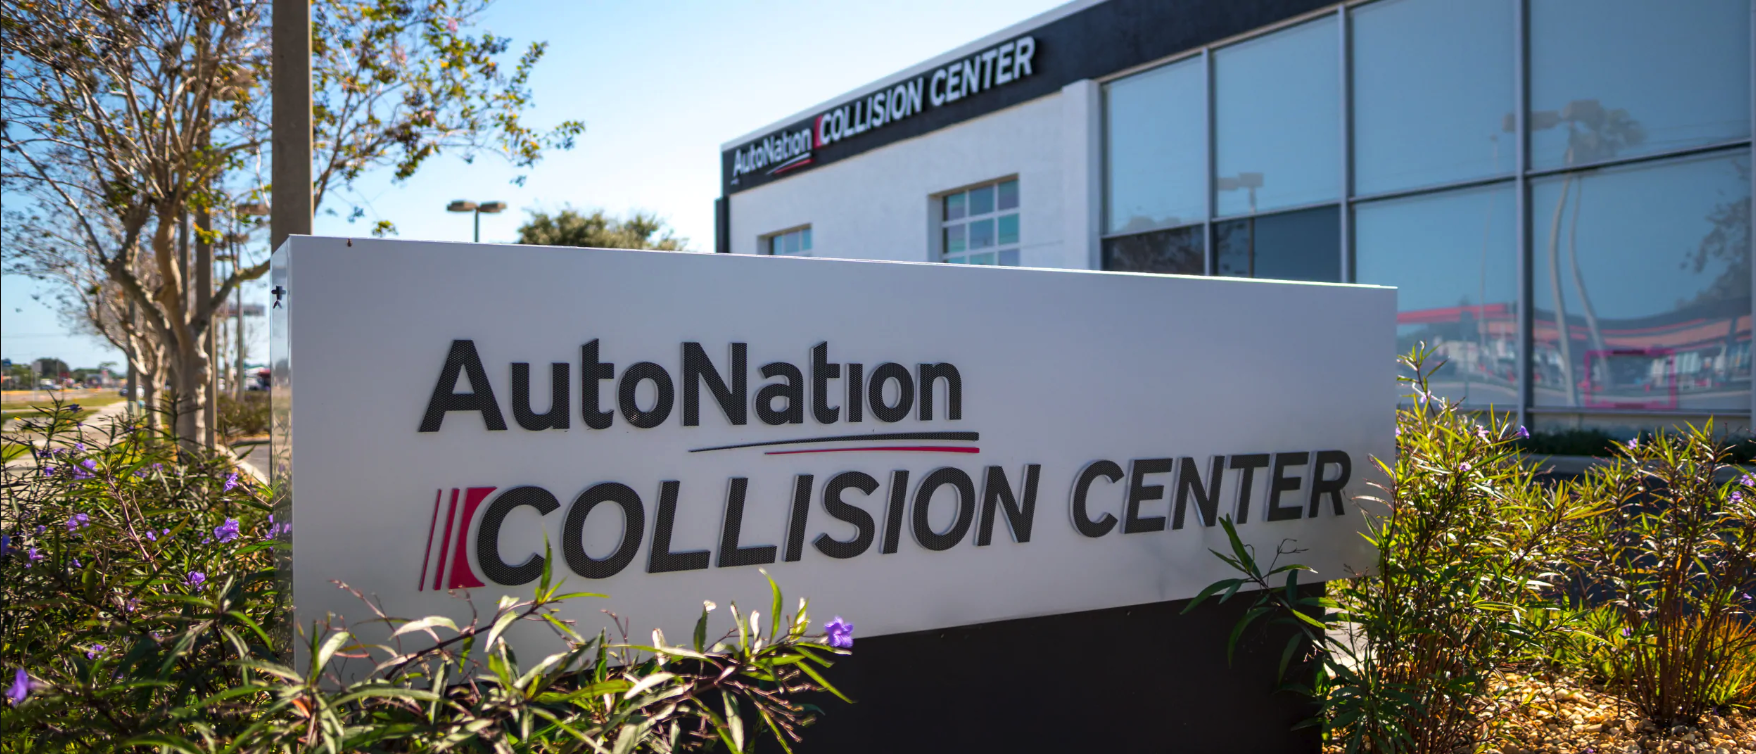 AutoNation Collision Center | AutoNation Buick GMC Corpus Christi